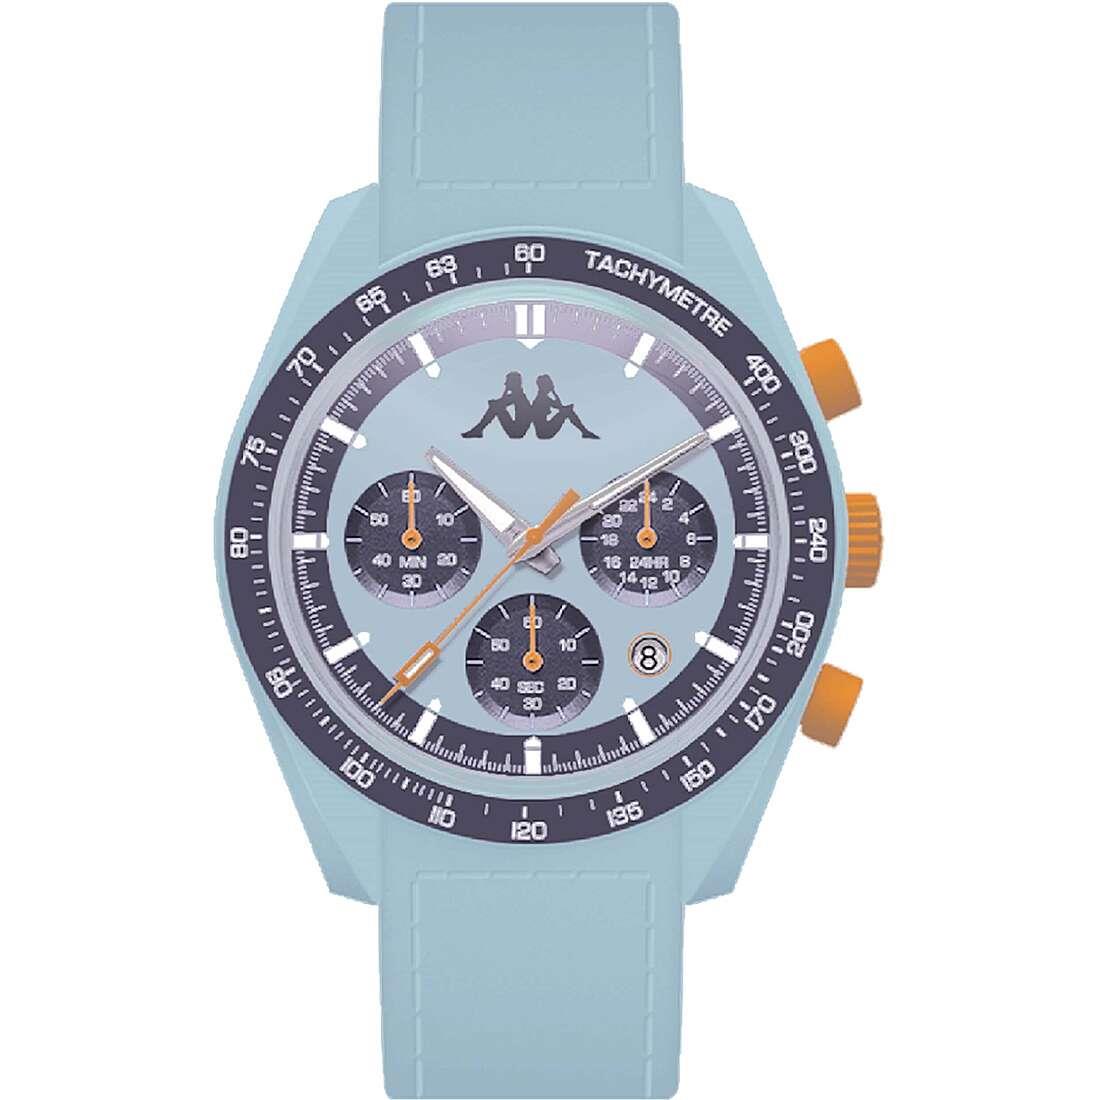 45mm light blue case watch - KAPPA